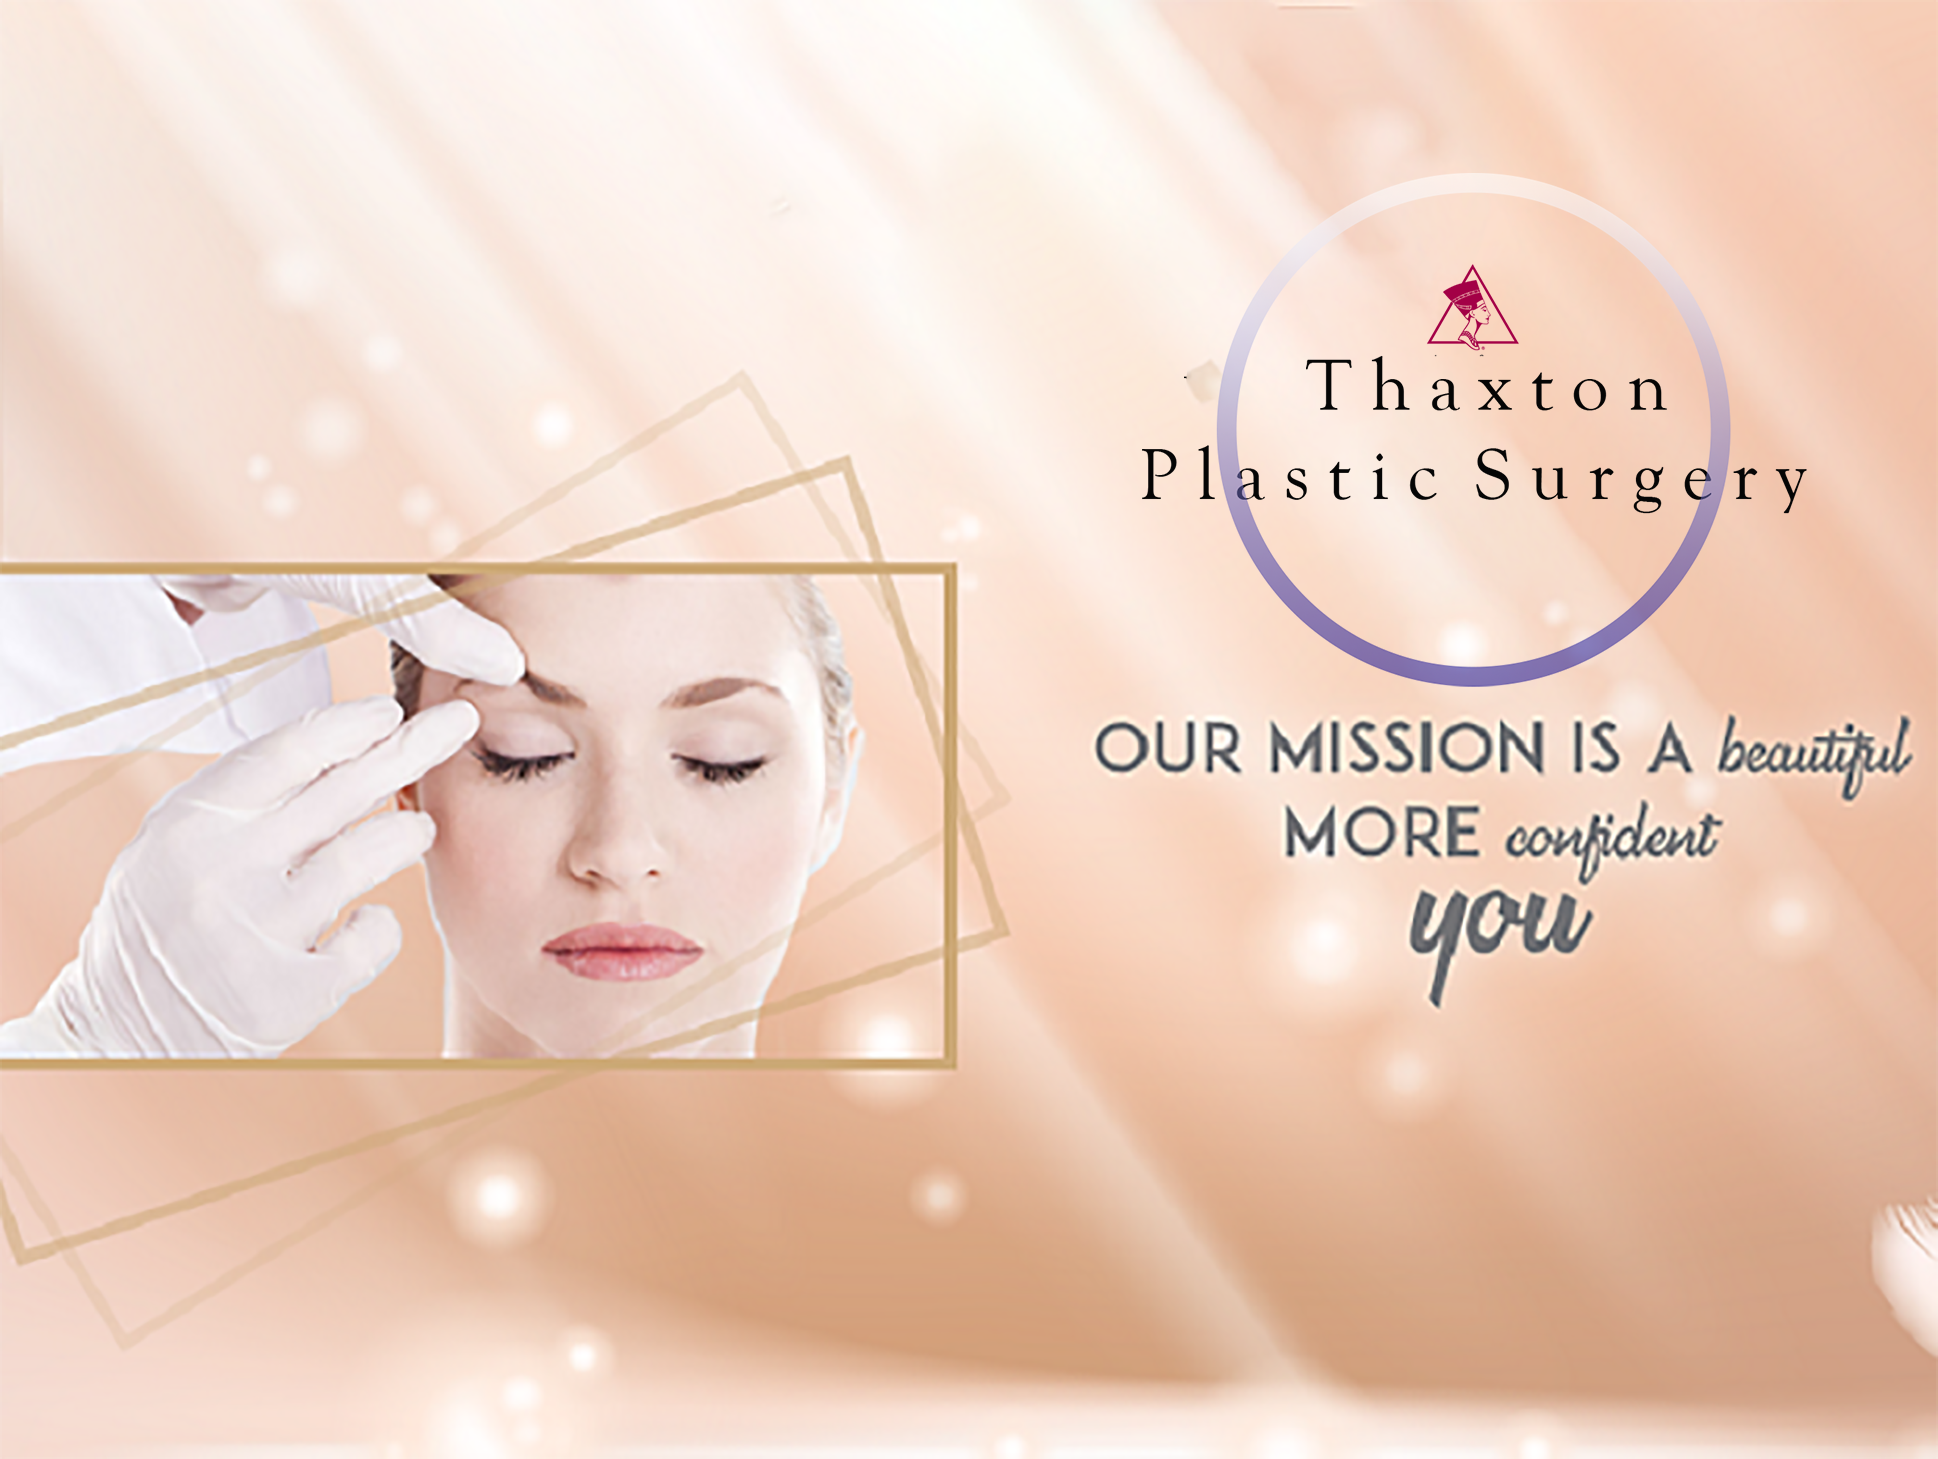 Thaxton Plastic Surgery